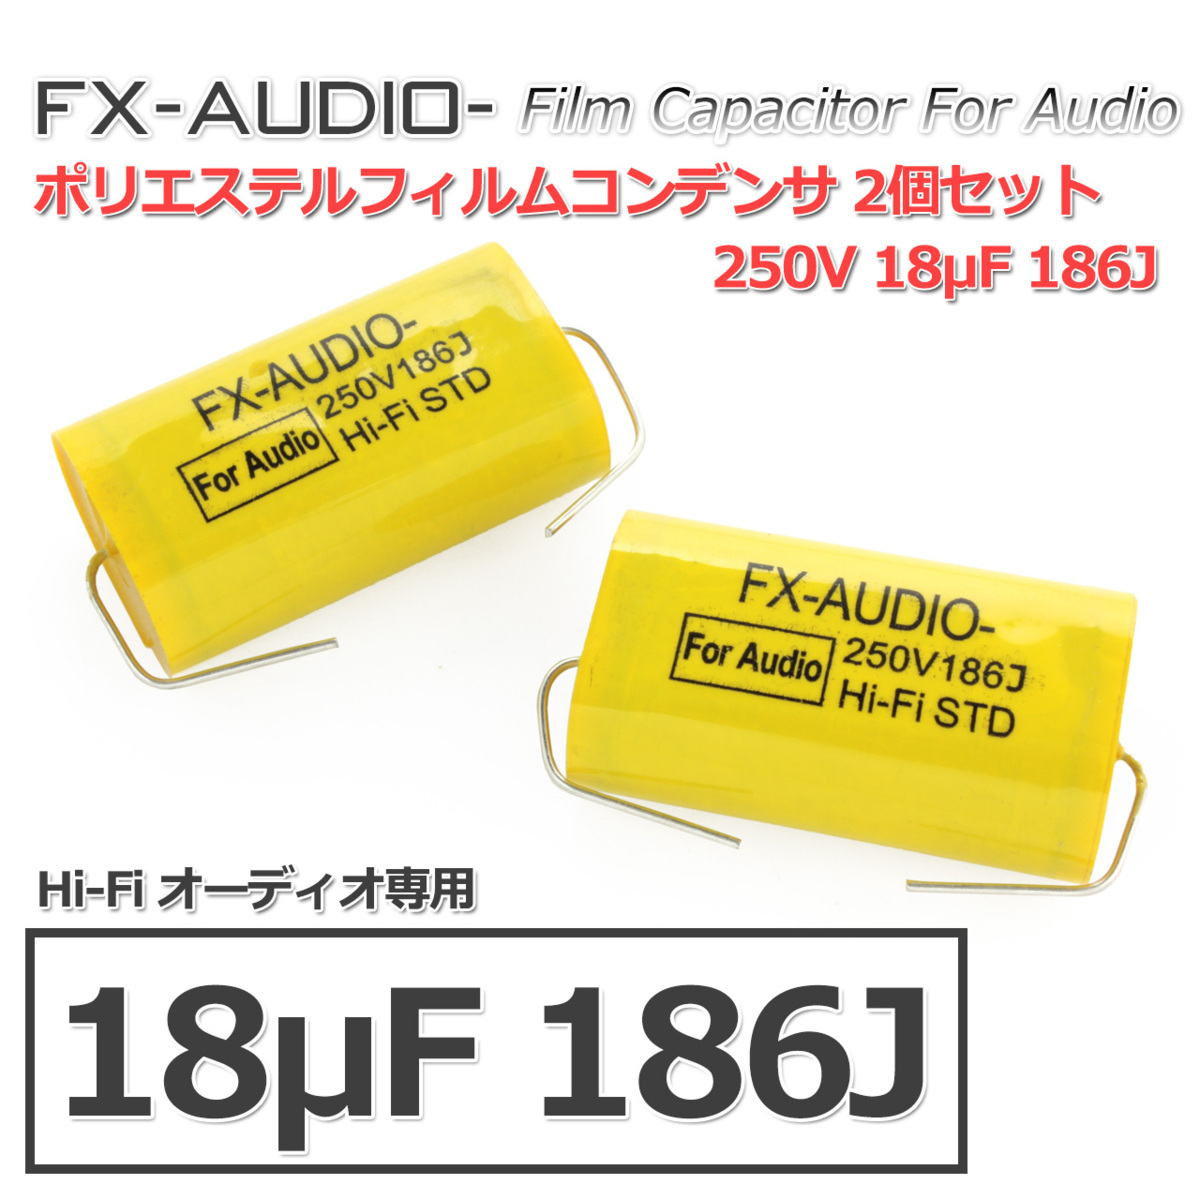 FX-AUDIO- 限定生産製品専用オーディオ用ポリエステルフィルムコンデンサ 250V 18μF 186J 2個セット ツイーター用・ネットワーク用にも_画像1